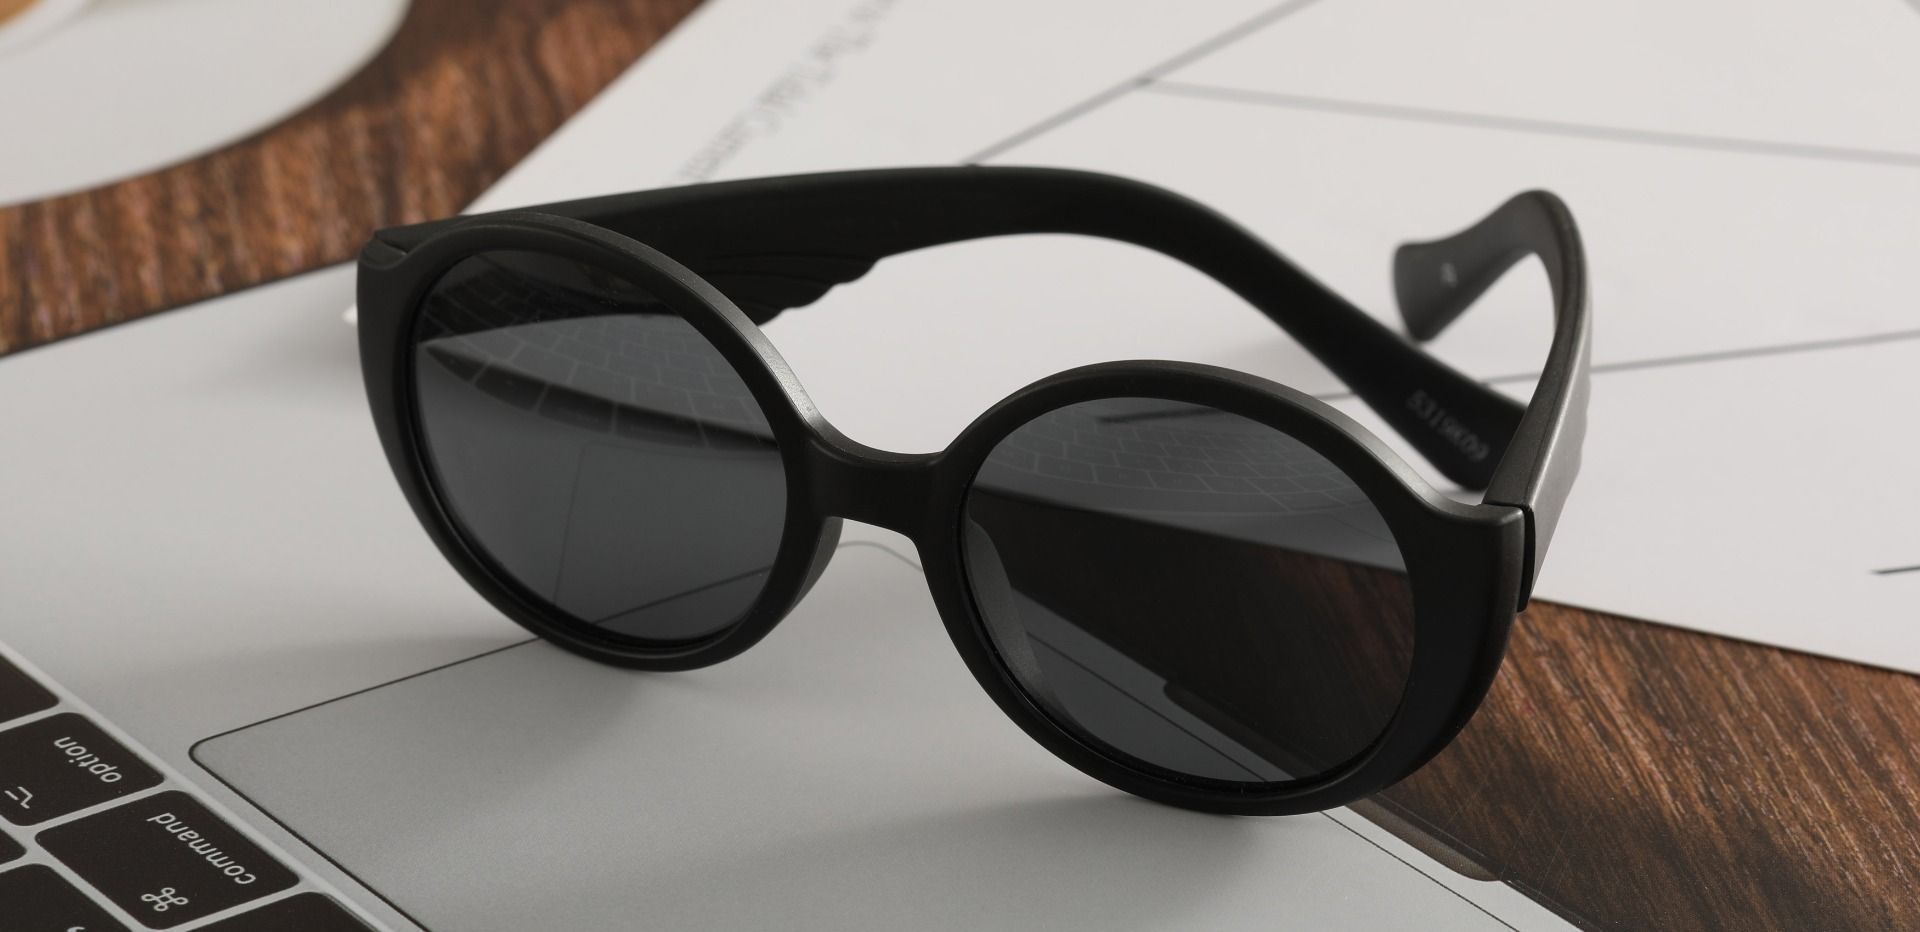 Raven Round Non-Rx Sunglasses - Black Frame With Gray Lenses